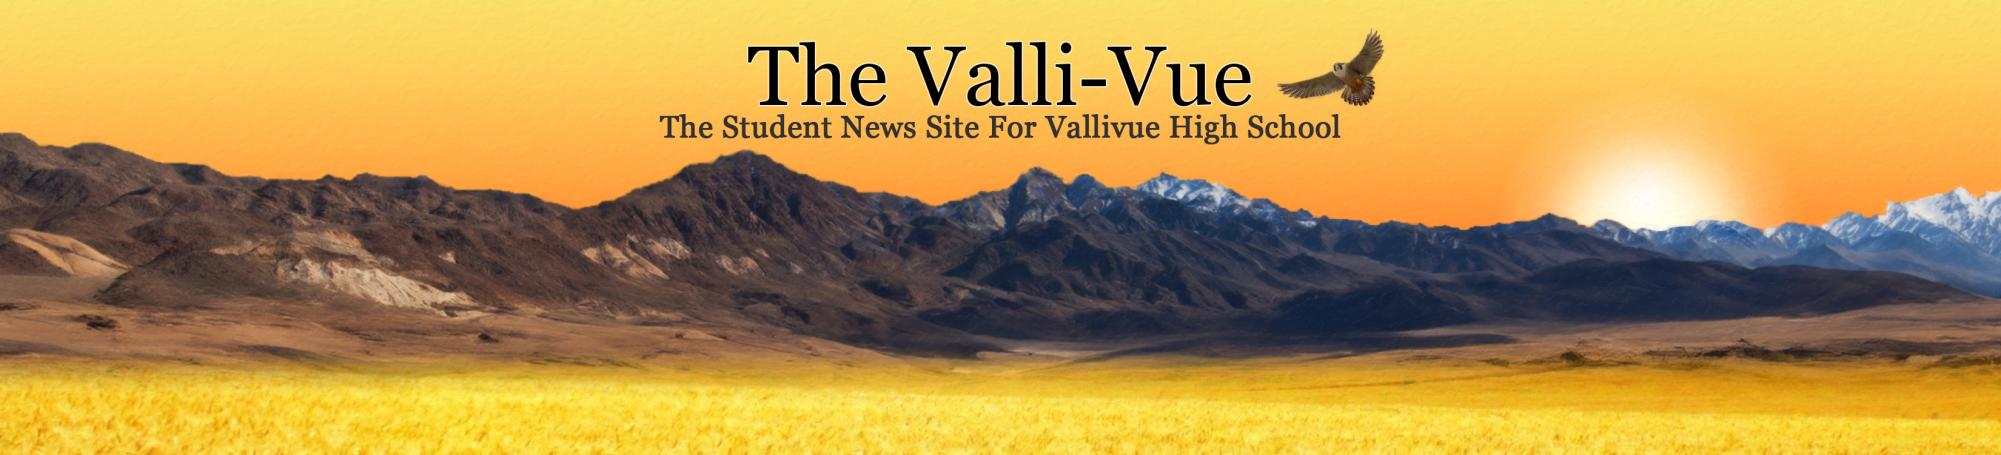 The Student News Site of Vallivue High School